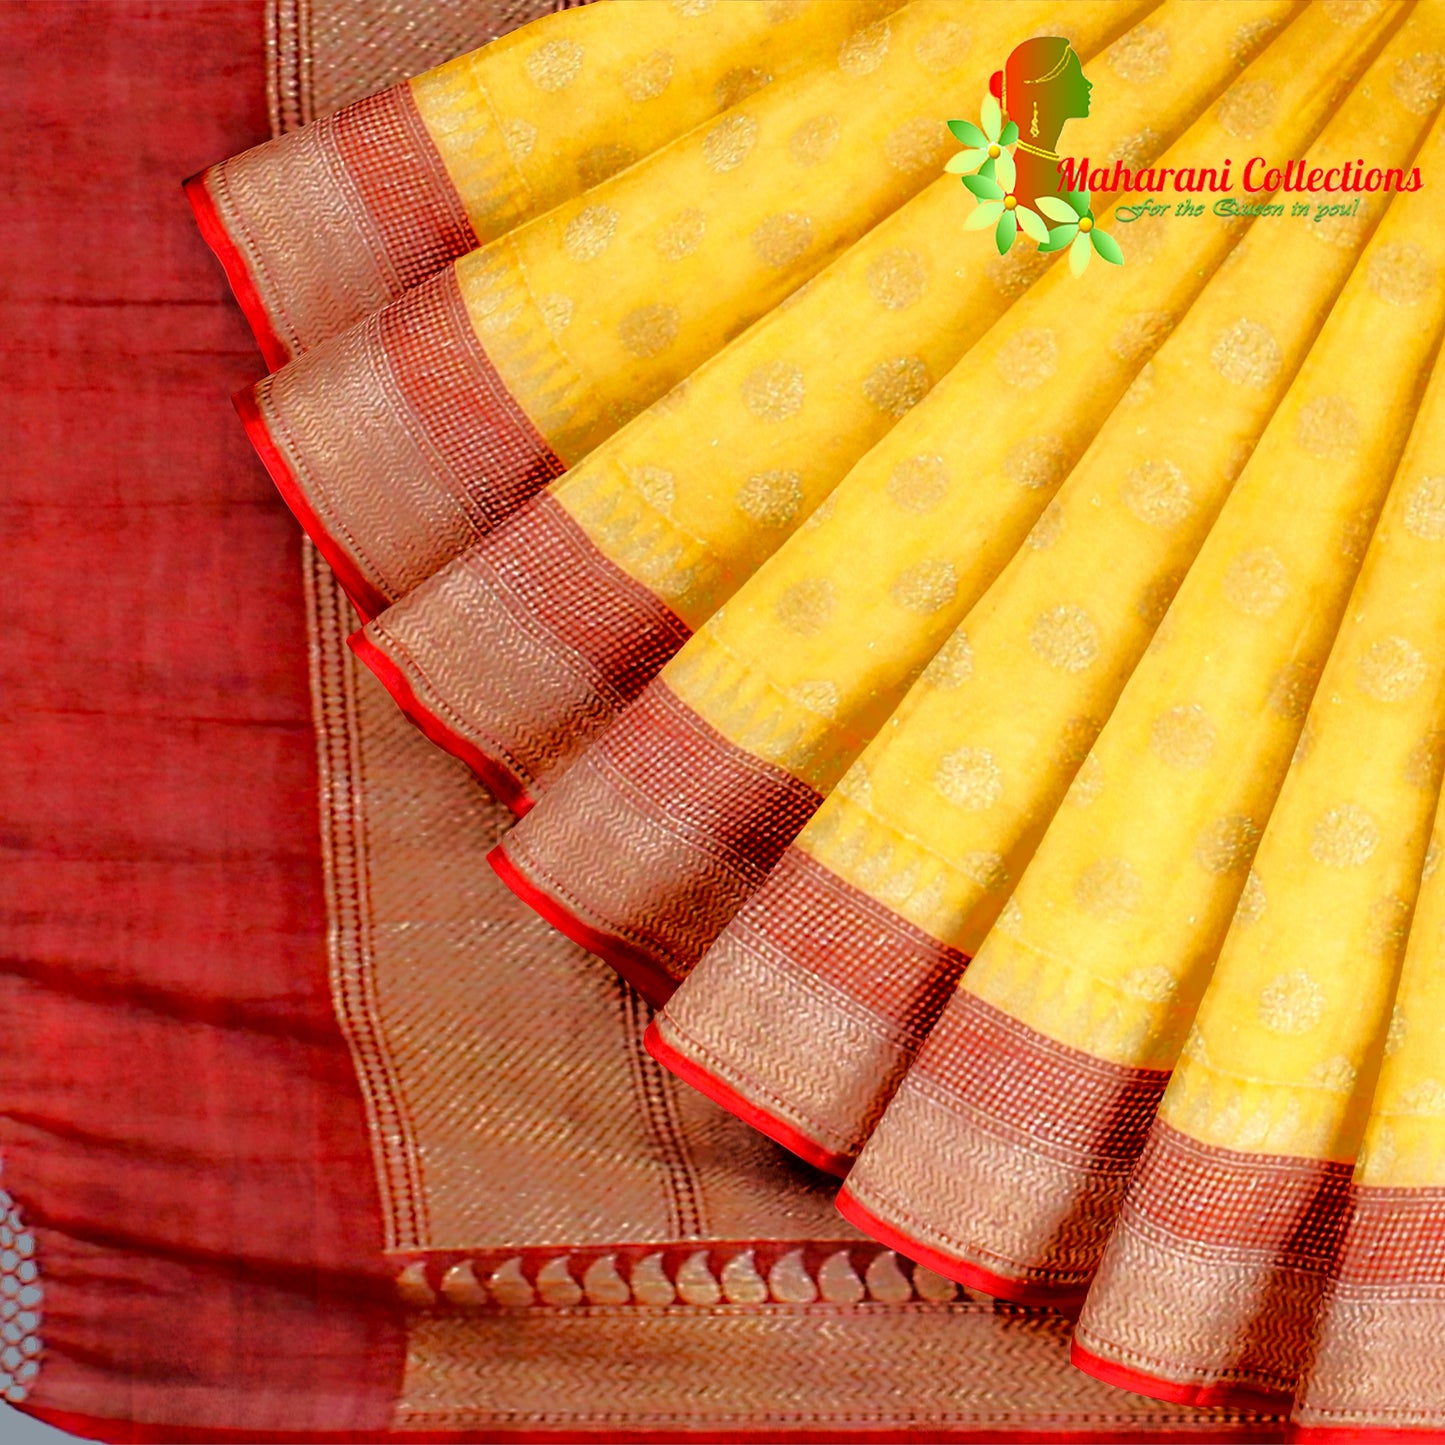 Maharani's Pure Banarasi Silk Saree - Yellow (with Stitched Blouse and Petticoat)